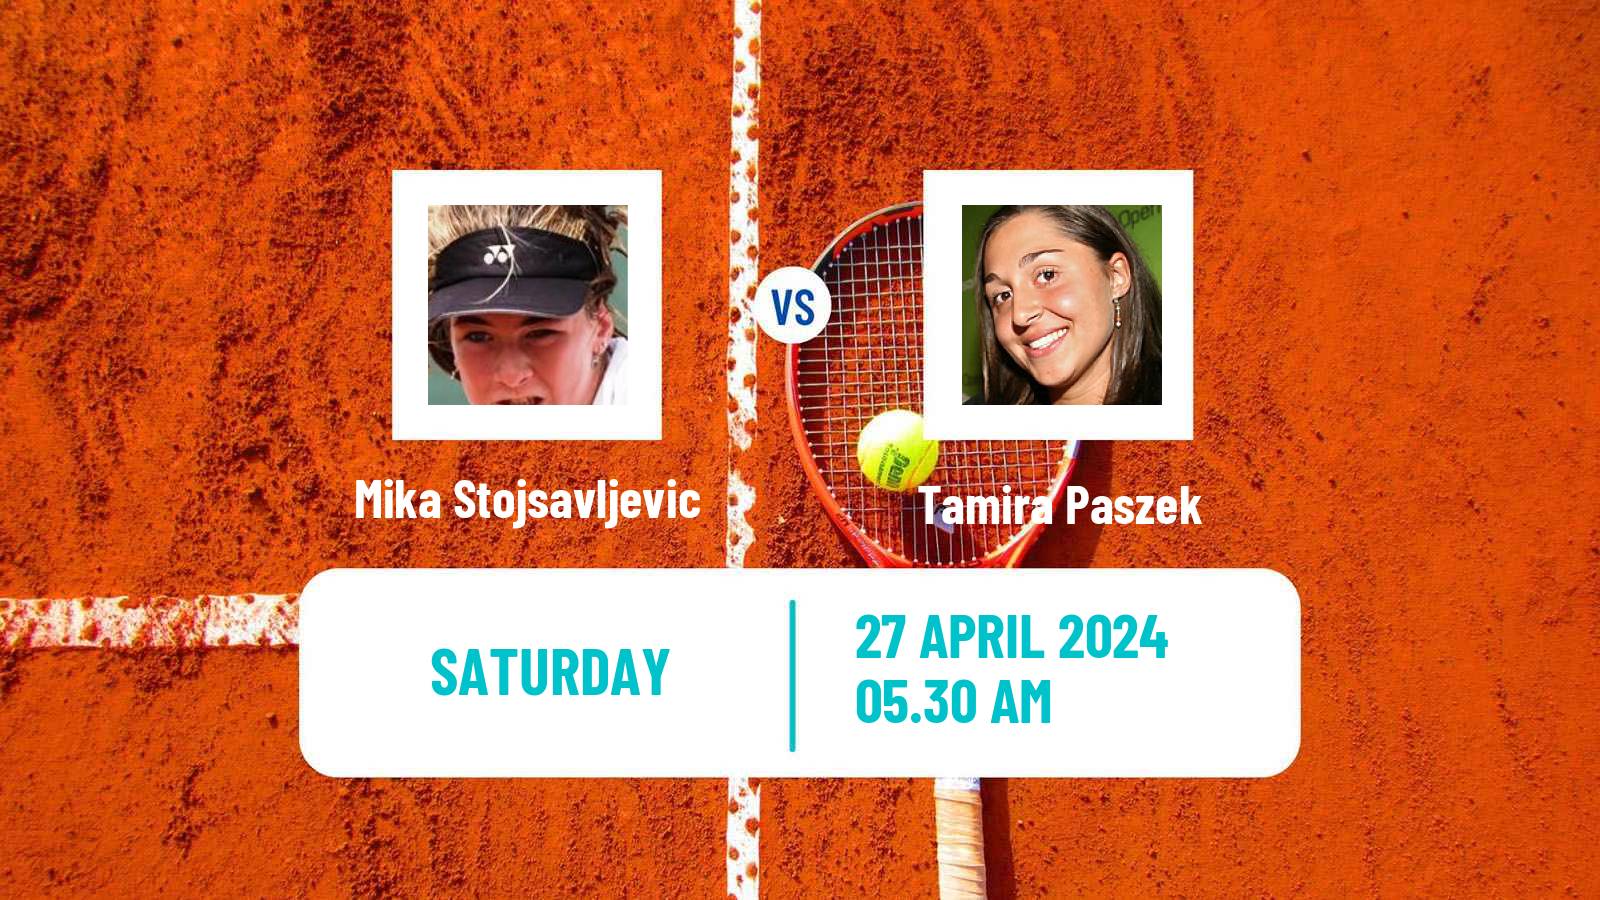 Tennis ITF W35 Nottingham Women Mika Stojsavljevic - Tamira Paszek